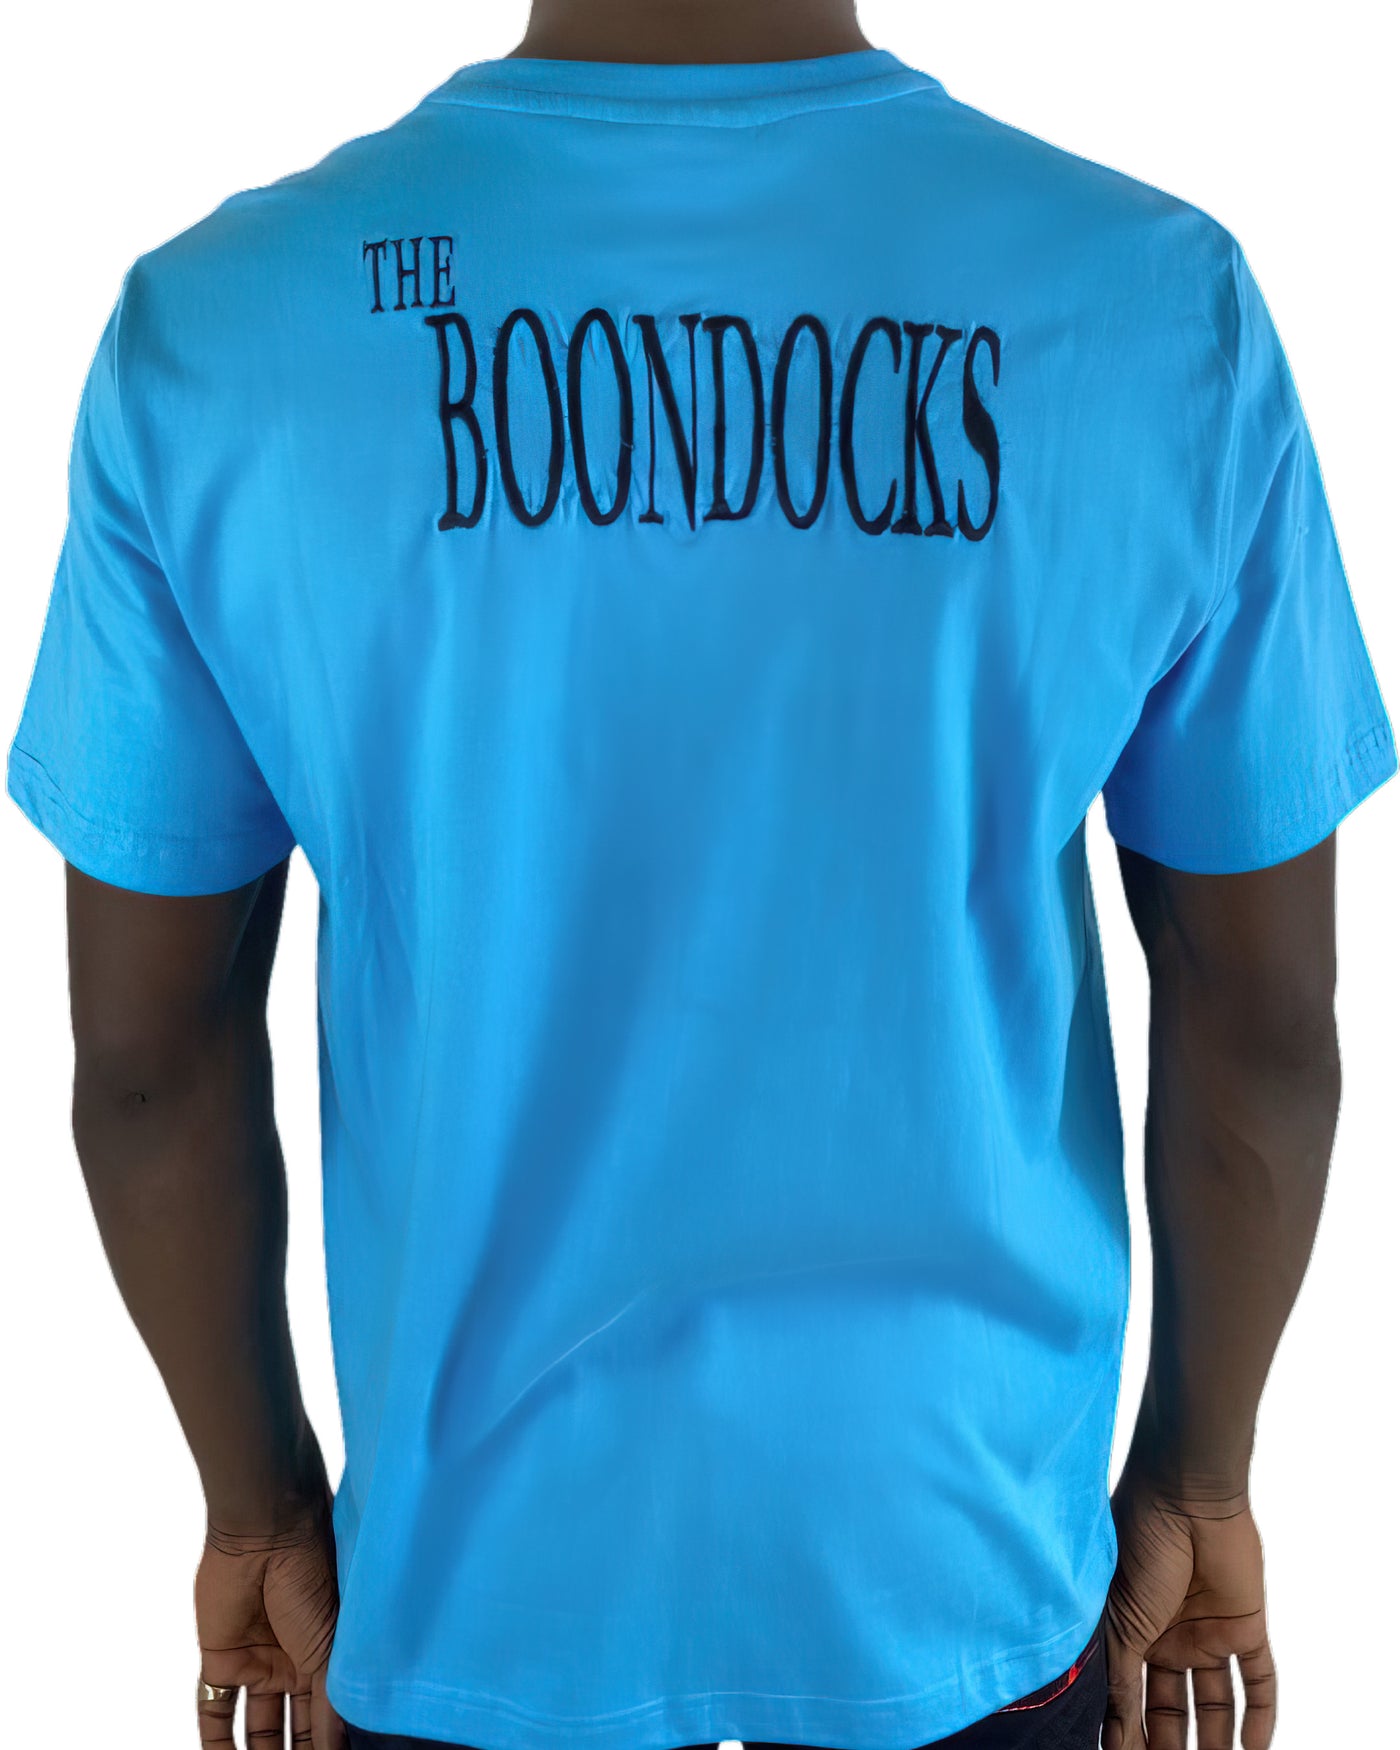 deKryptic x The Boondocks - Say Hello Aqua T-Shirt